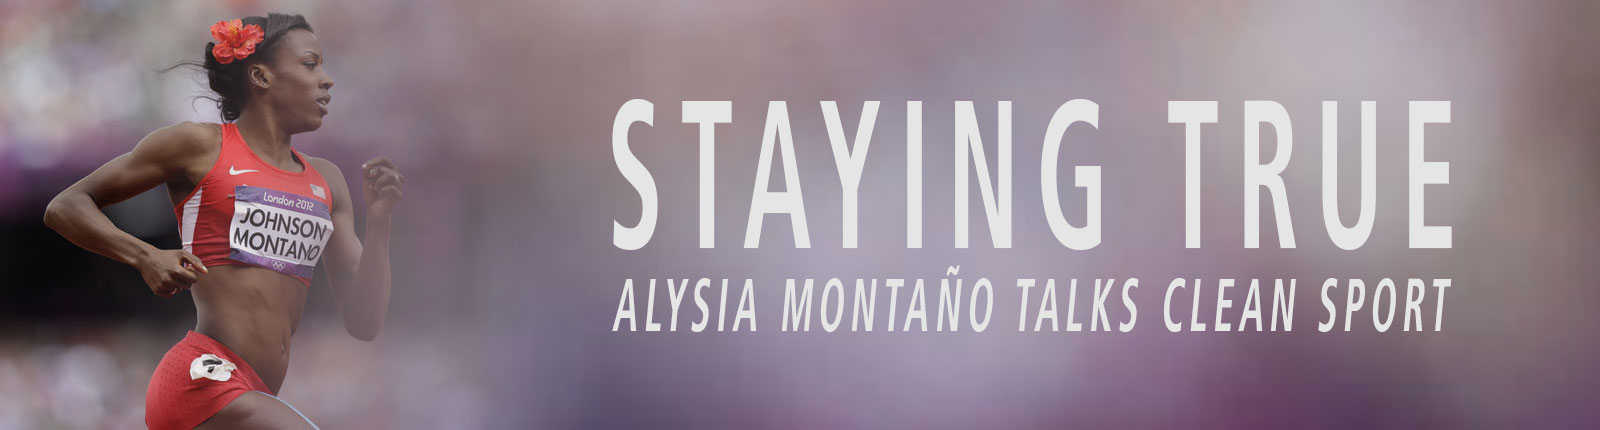 staying-true-alysia-montano-talks-clean-sport